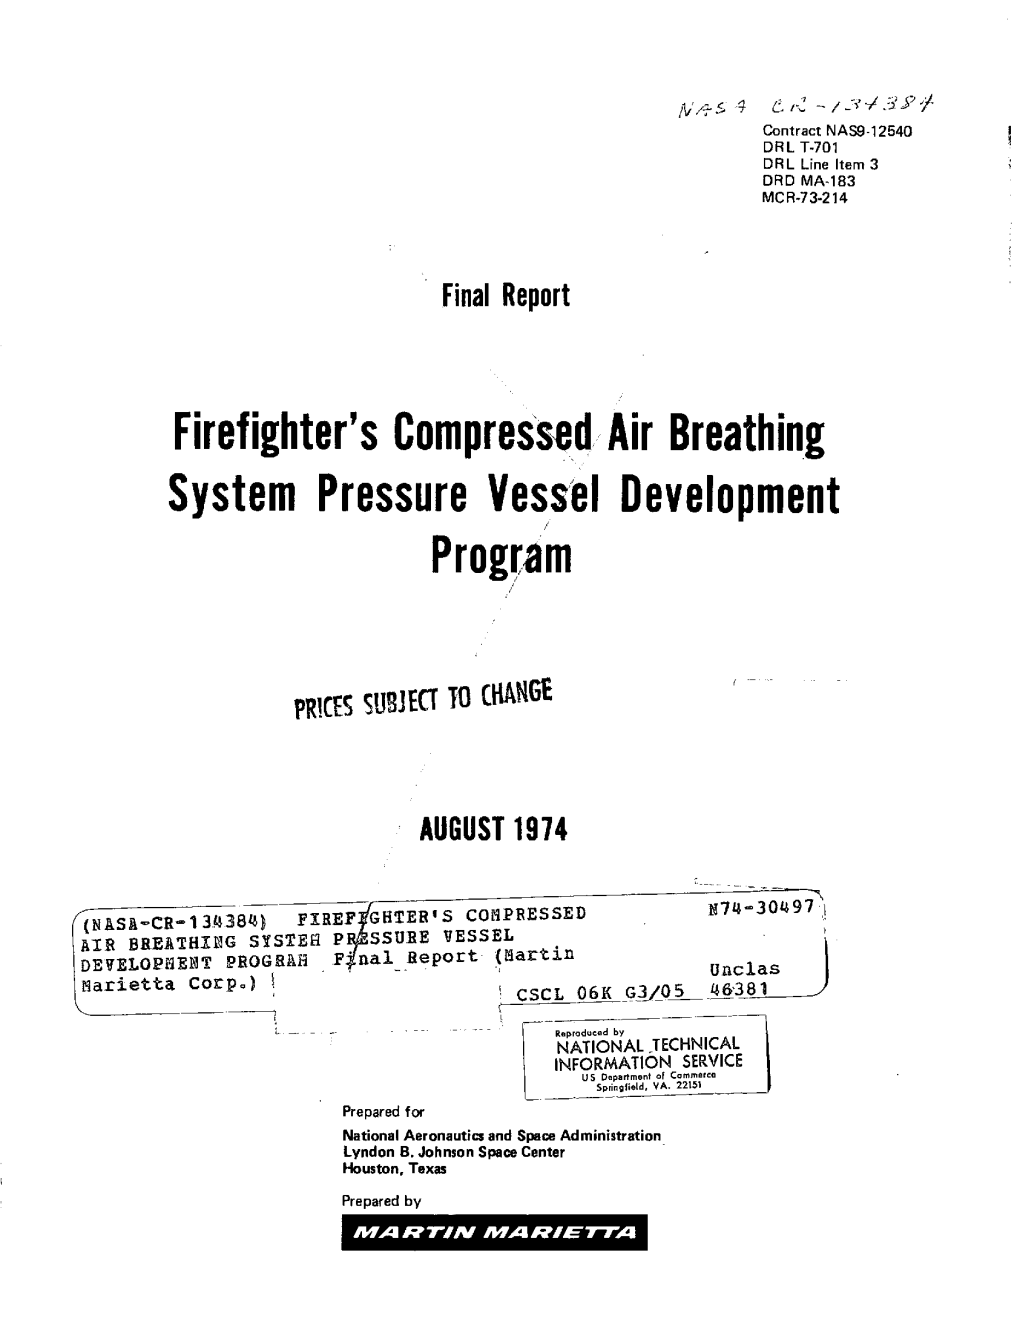 Firefighter's Compressed Air Breathing System Pressure Vessel Development Program